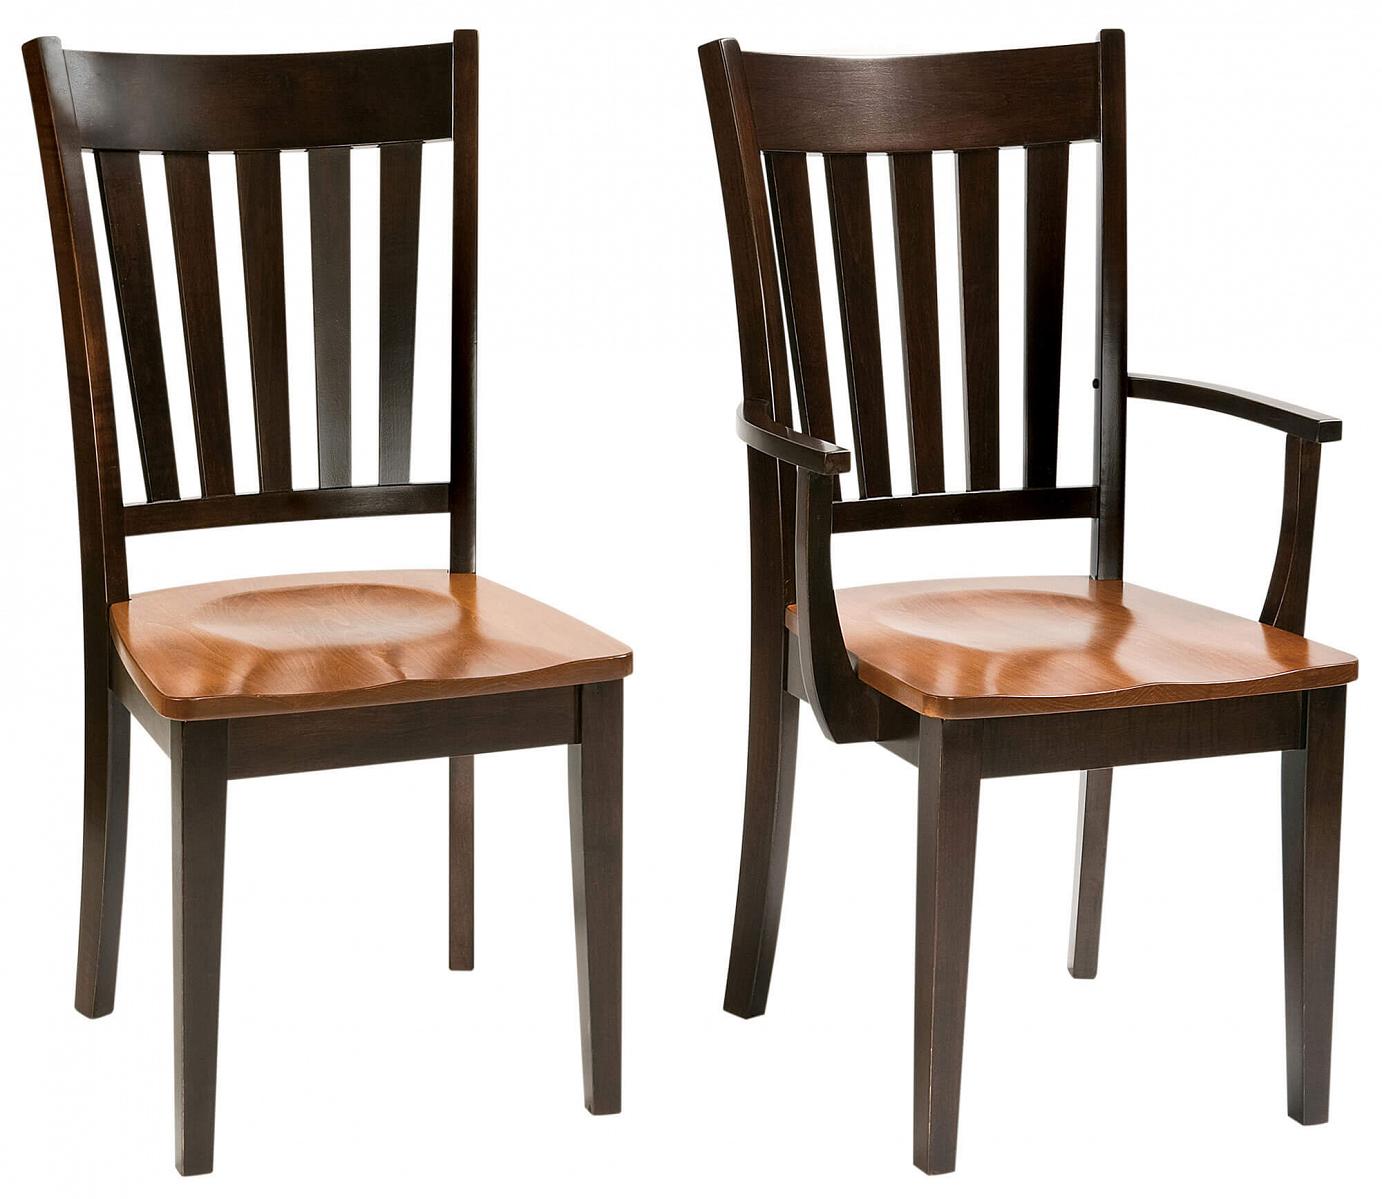 RH Yoder Marbury Chairs